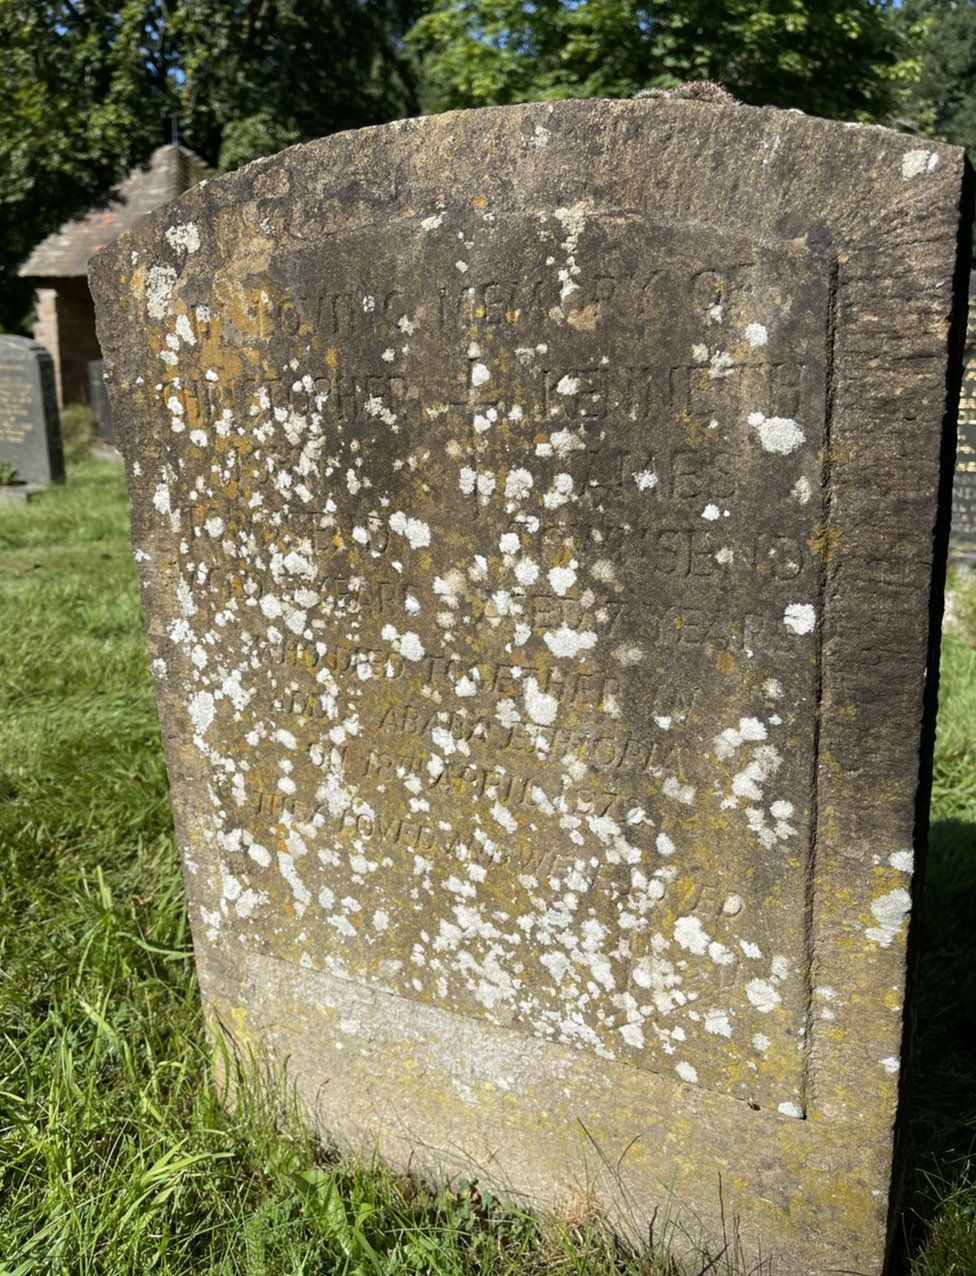 Headstone in Berkswell. West Midlands